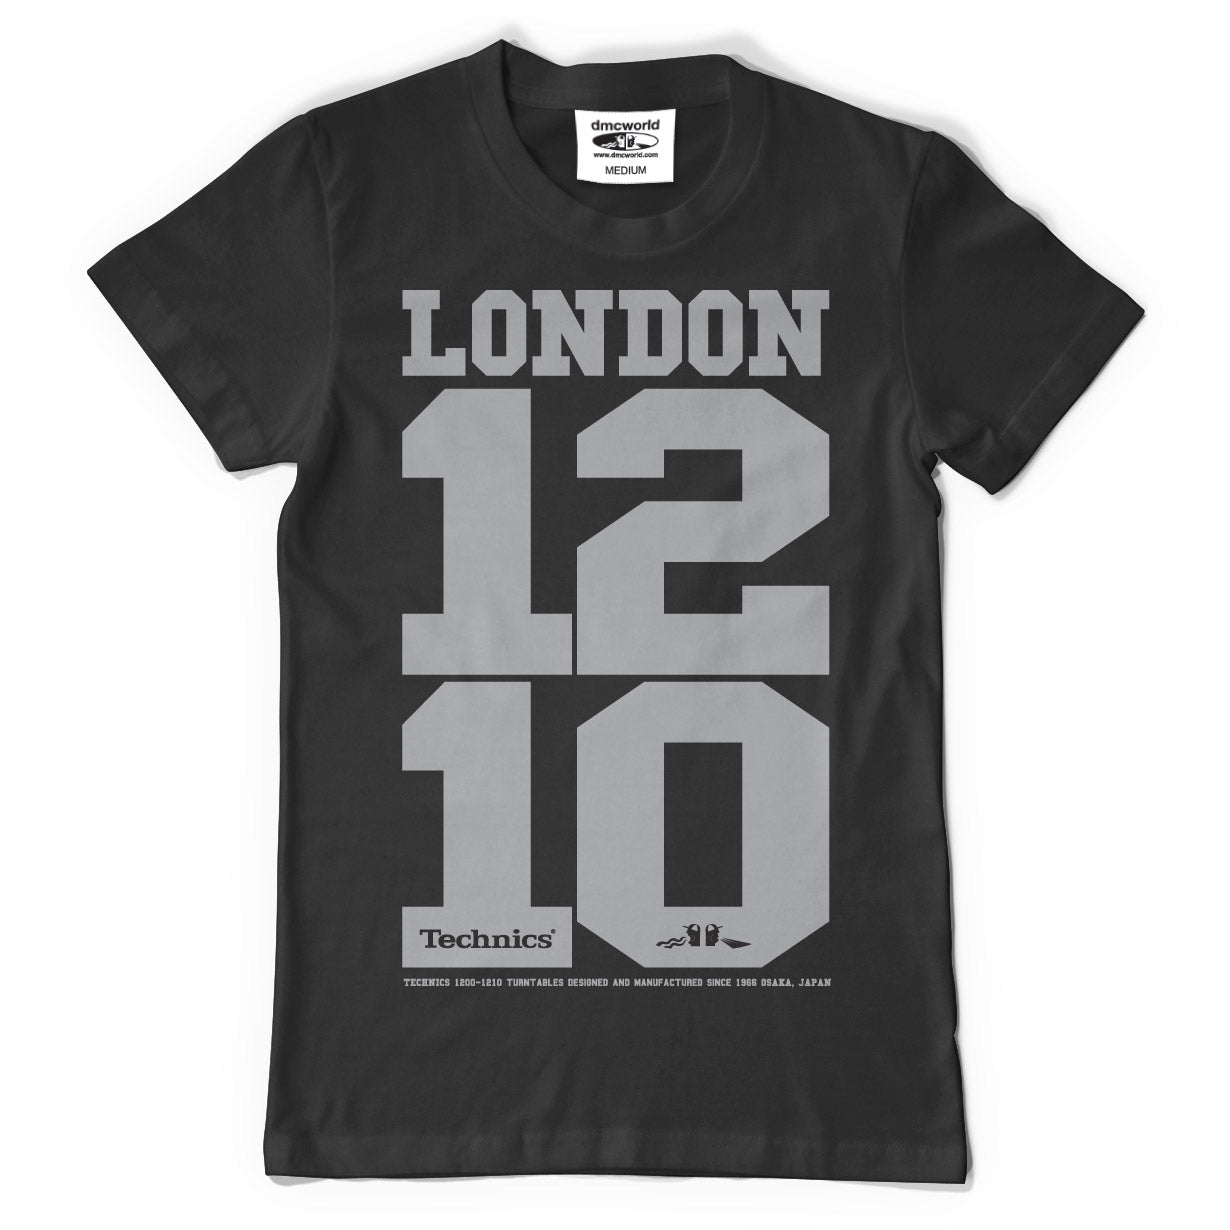 Technics LONDON 1210 T.Shirt